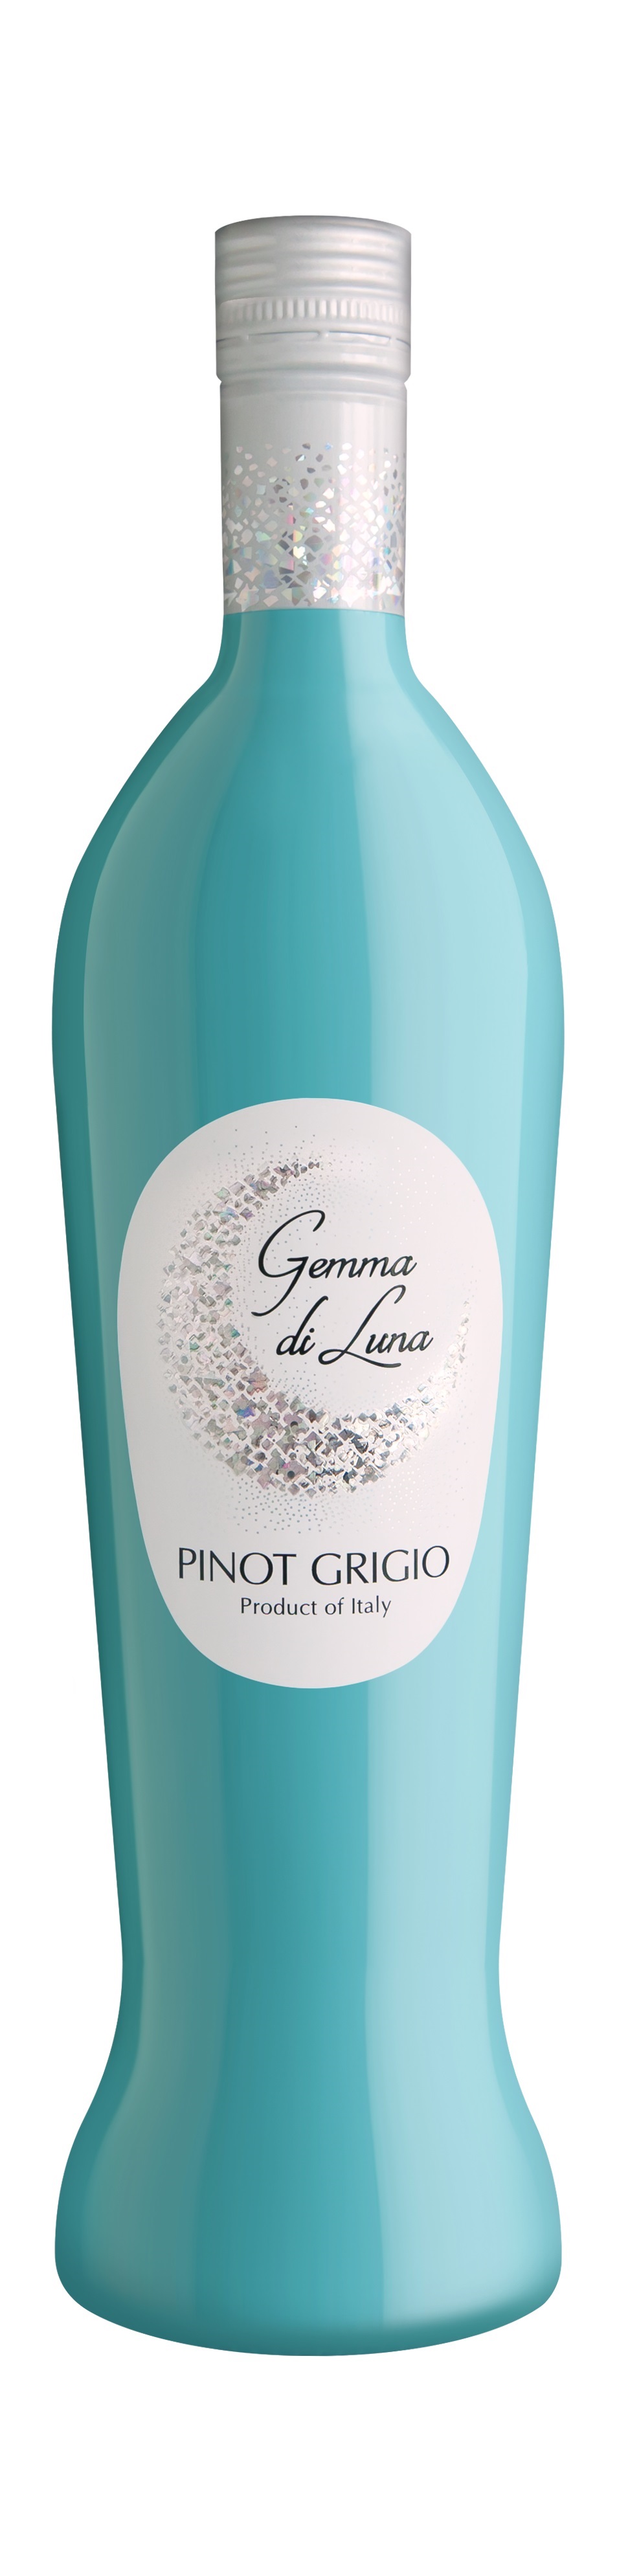 72265 Gemma di Luna Pinot Grigio 0,75 liter